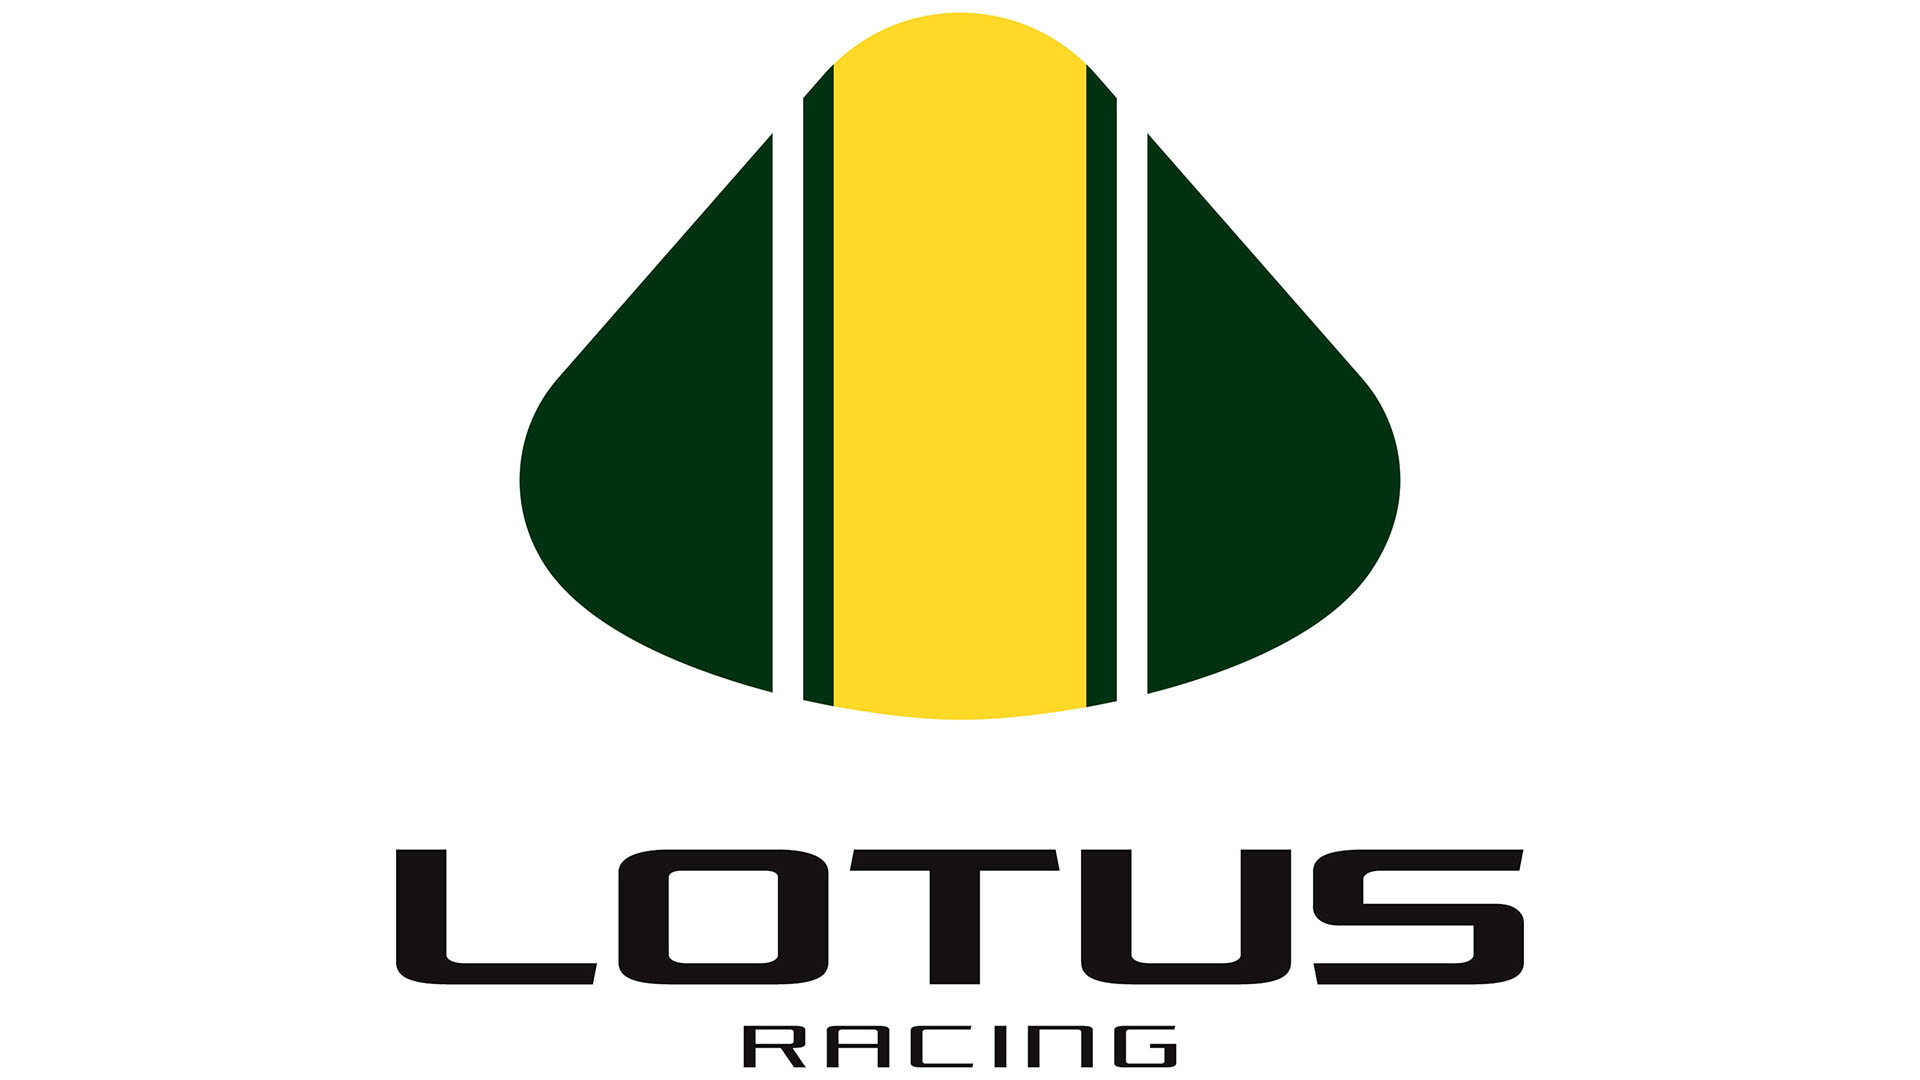 Lotus Logo Meaning and History [Lotus symbol]